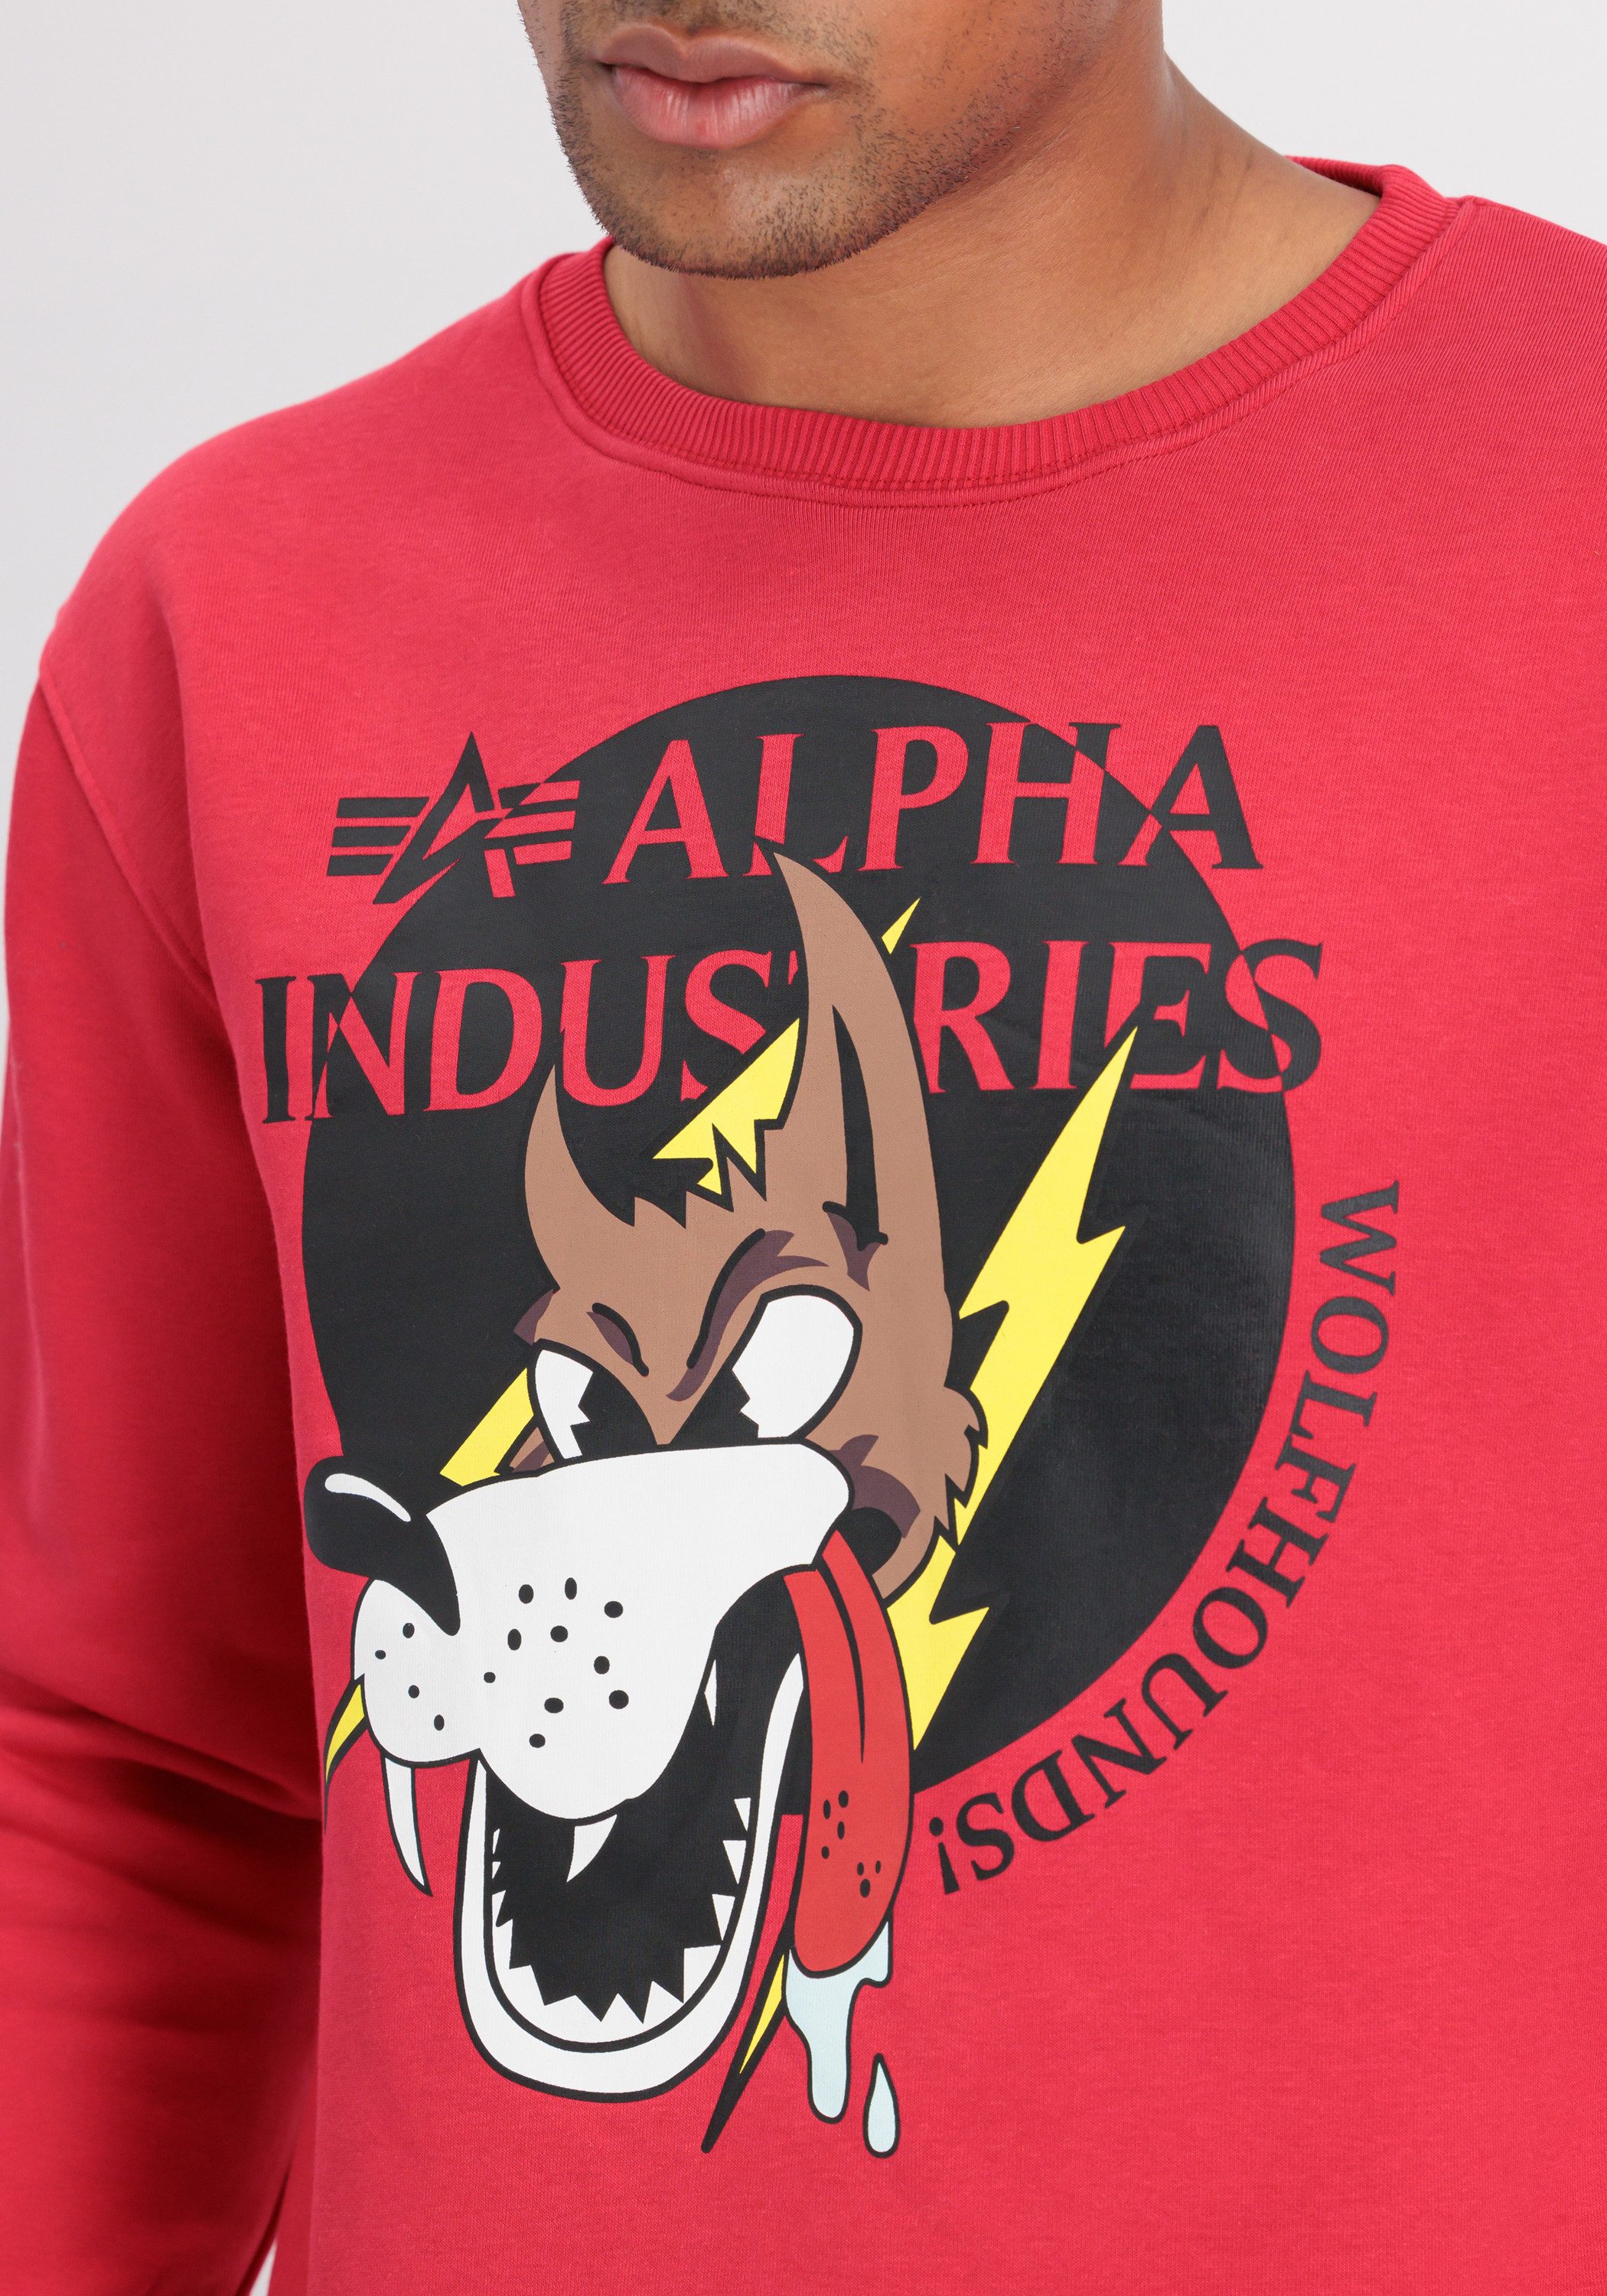 Alpha Industries Sweater Men Sweatshirts Wolfhounds Sweater